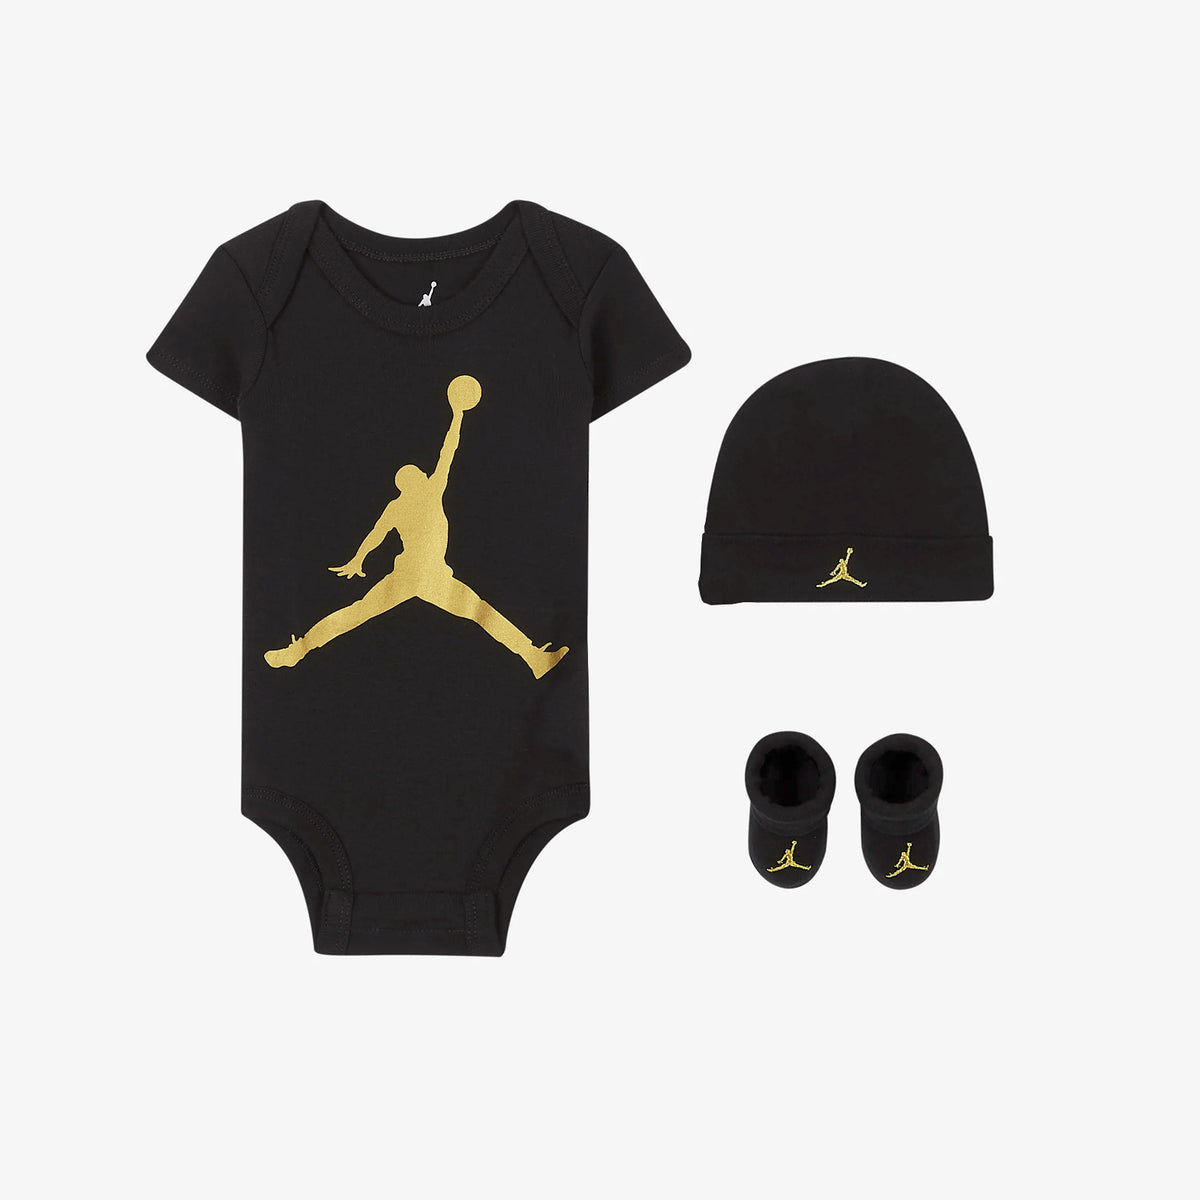 Jordan Infant 3 Piece Set - Black/Gold